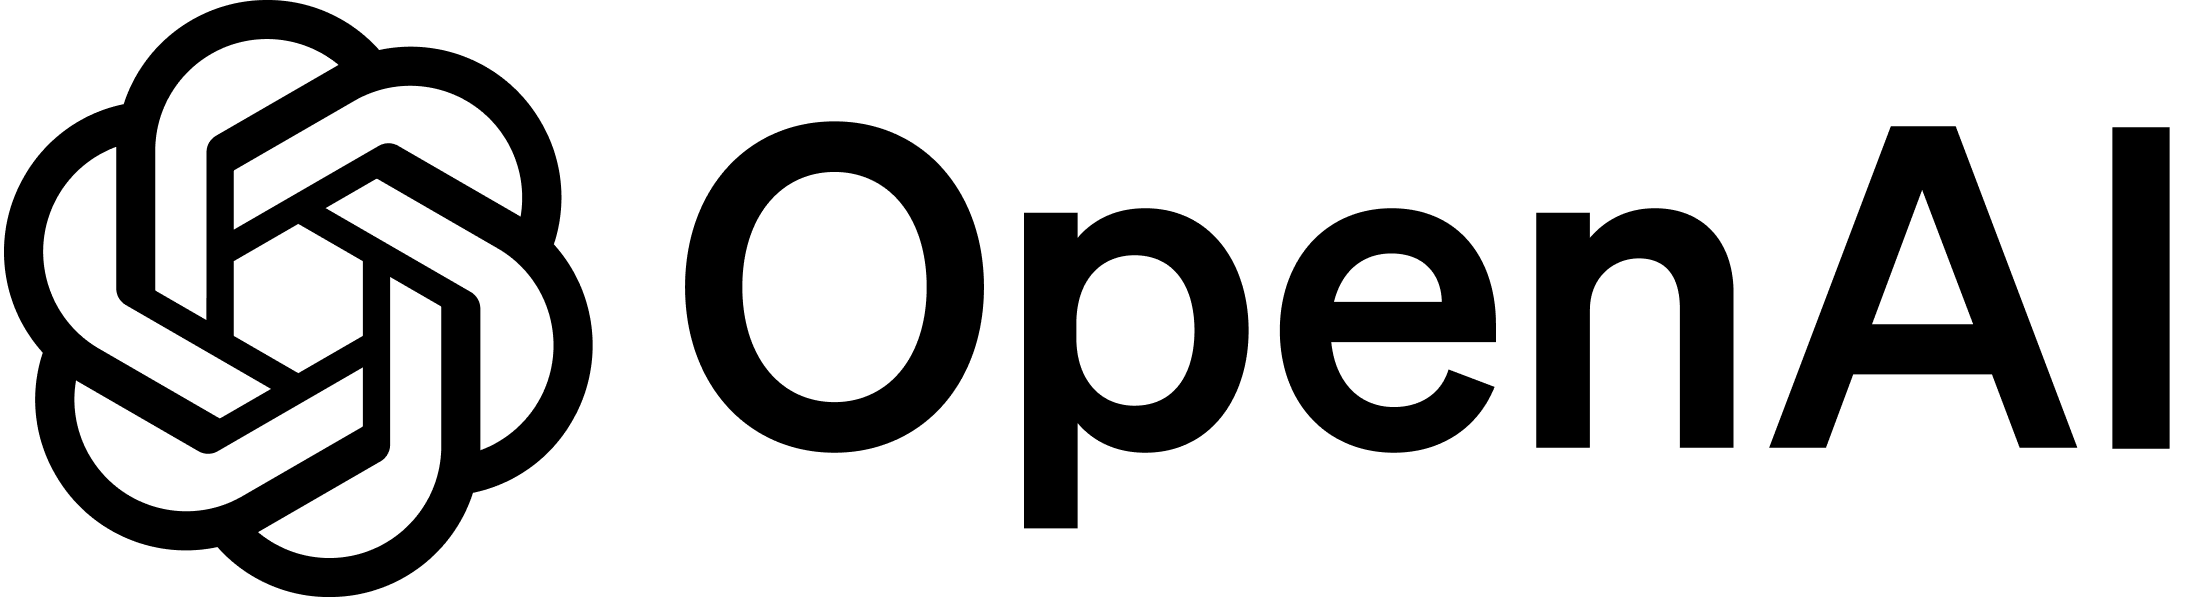 Zepeto logo